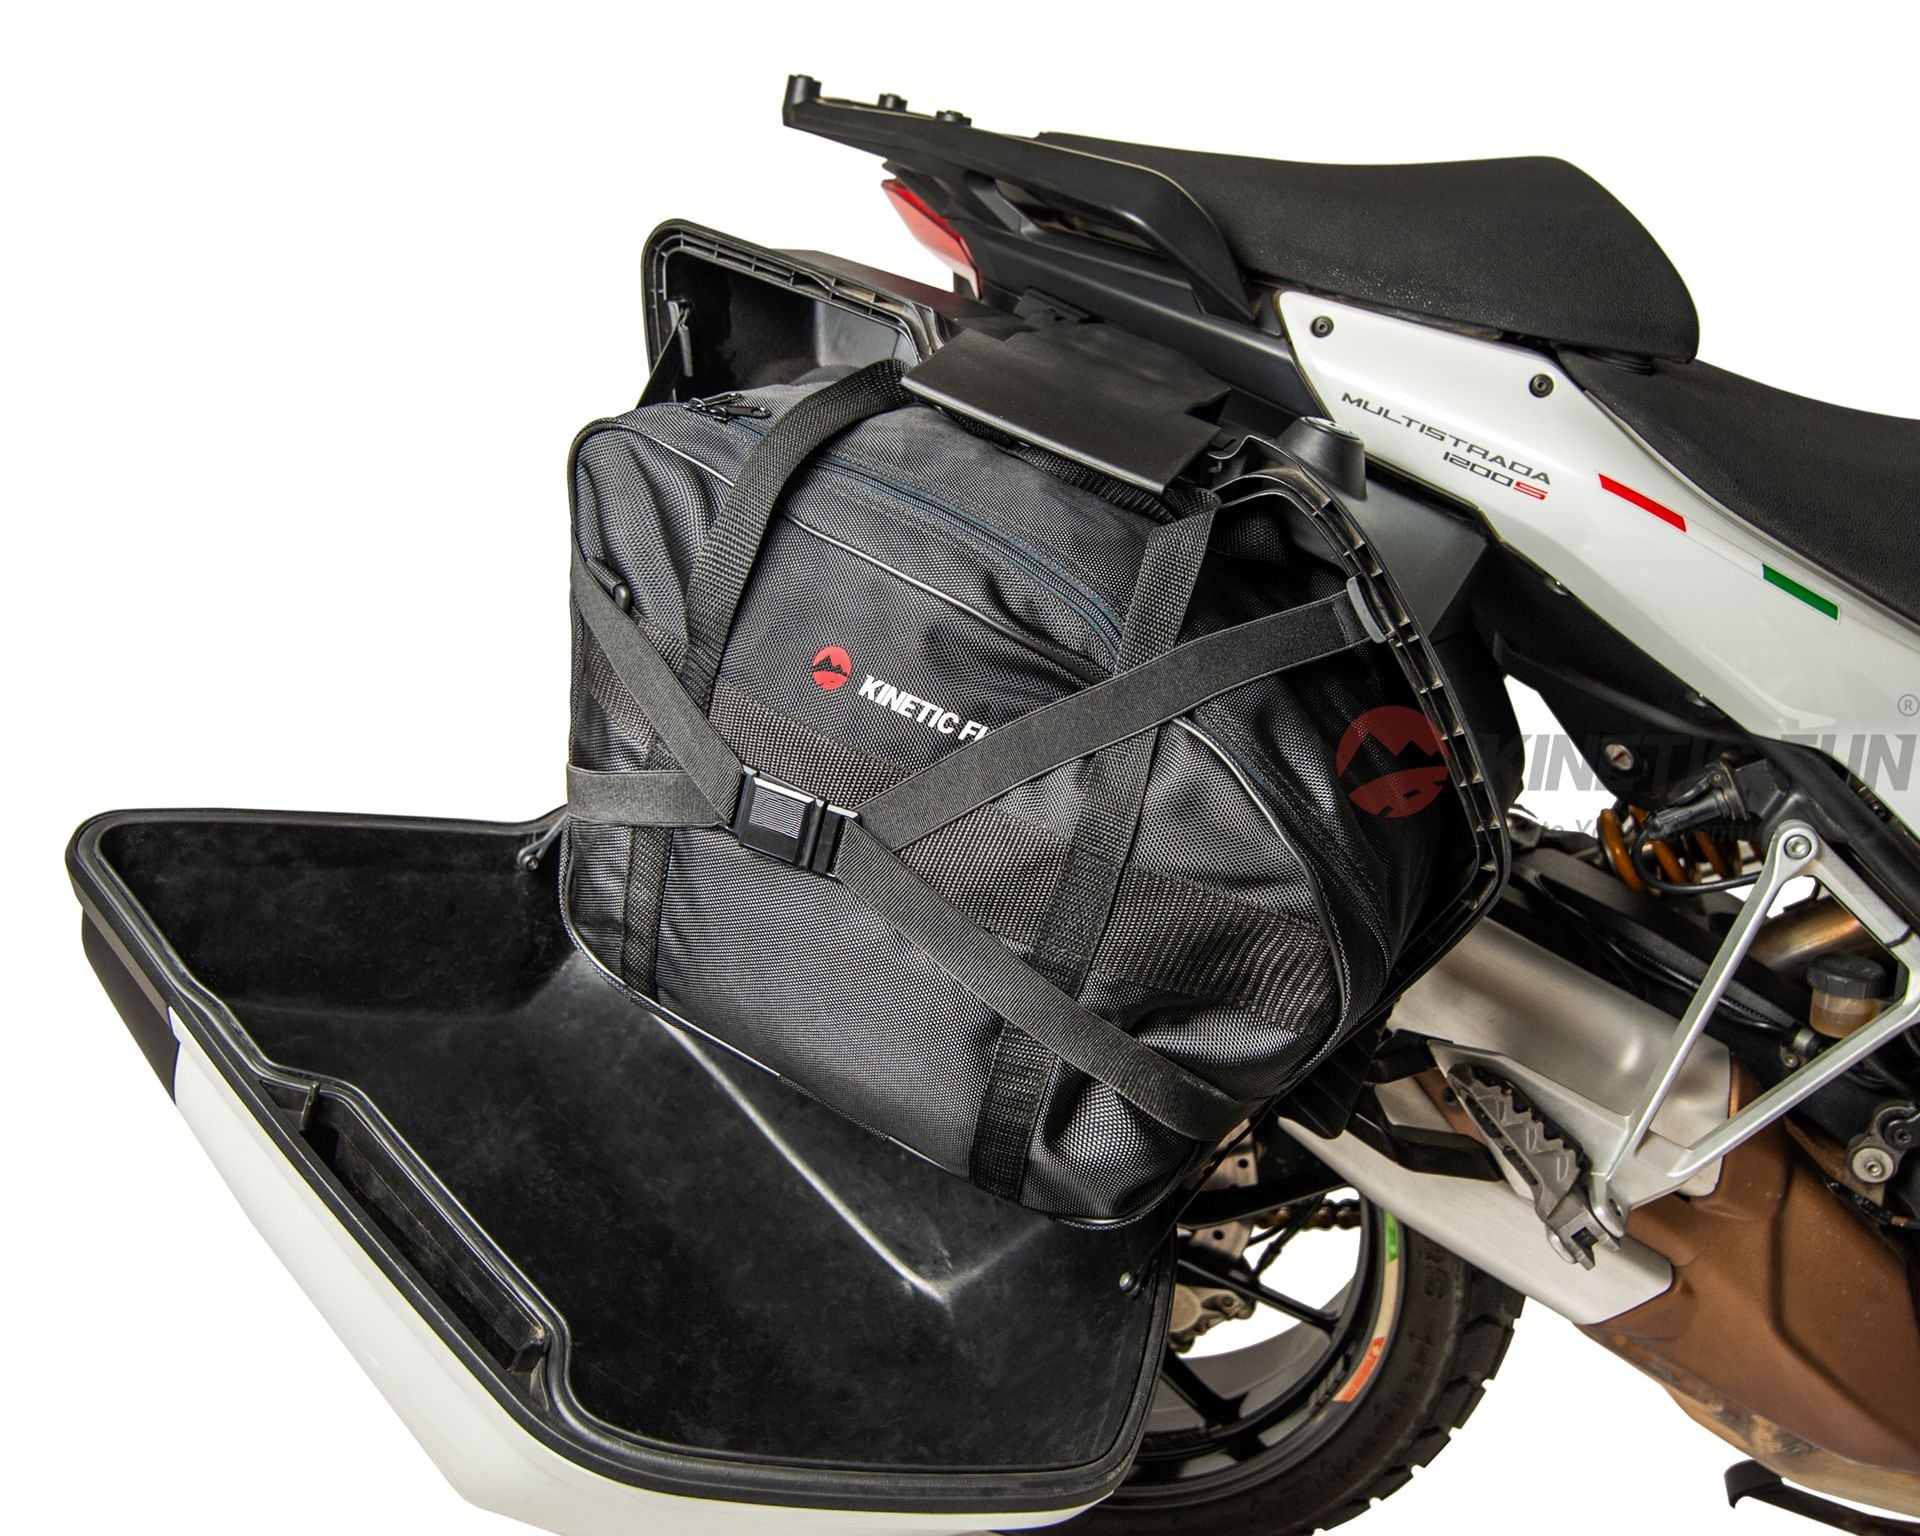 Сумки для мотоцикла Ducati MULTISTRADA 1200 / S - внутренние для кофров Ducati Multistrada 10-15'